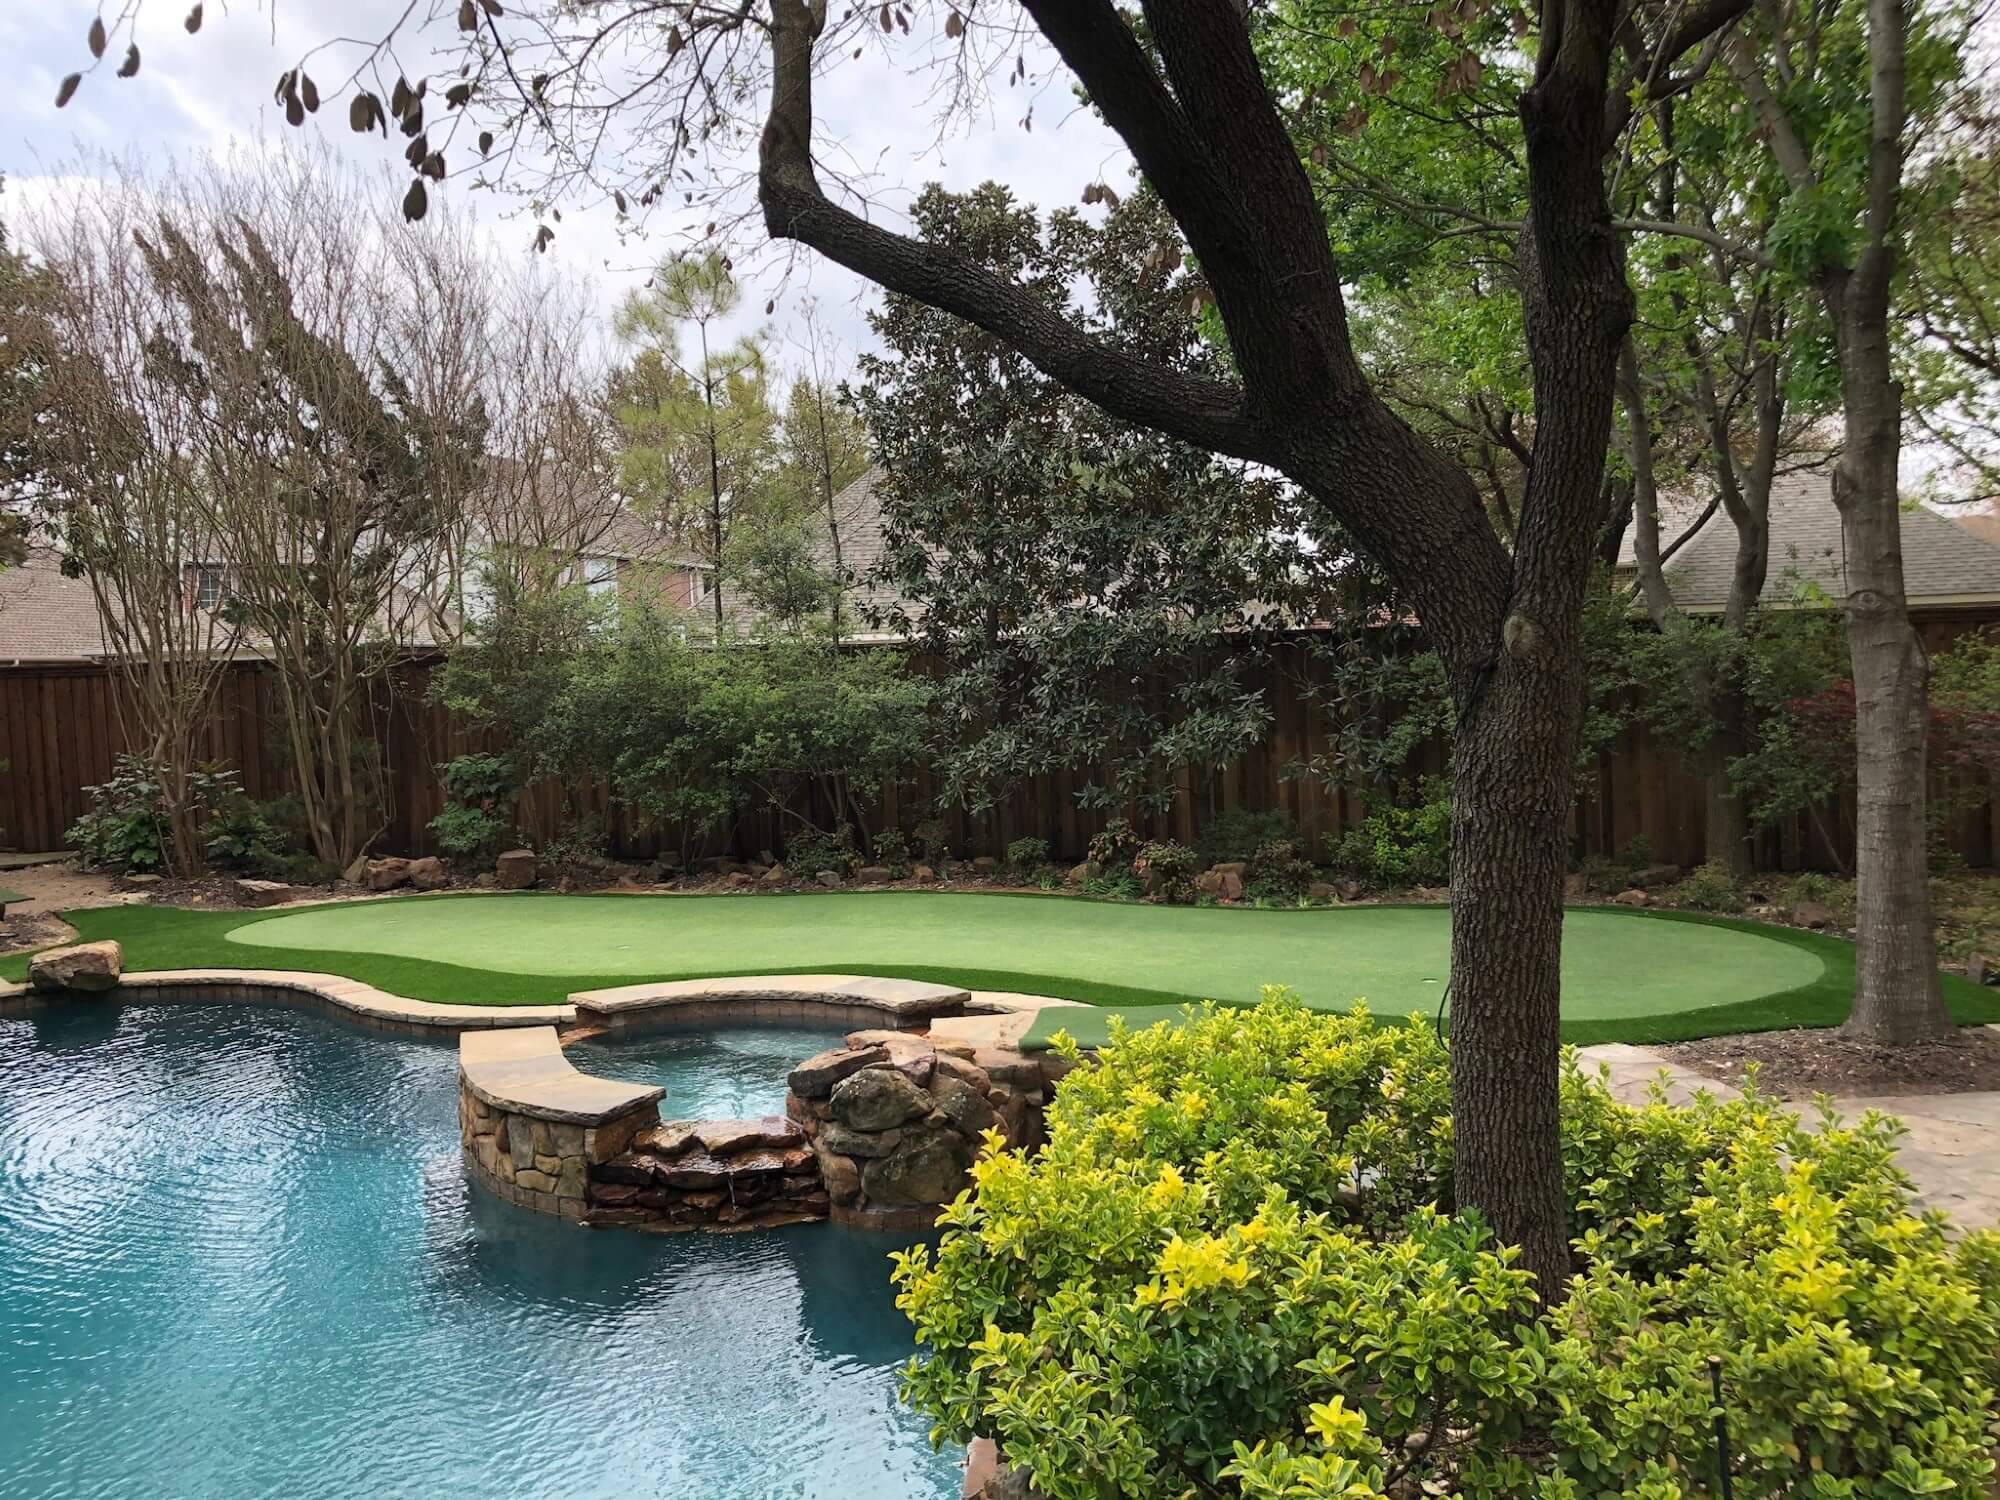 Artificial grass backyard and pool